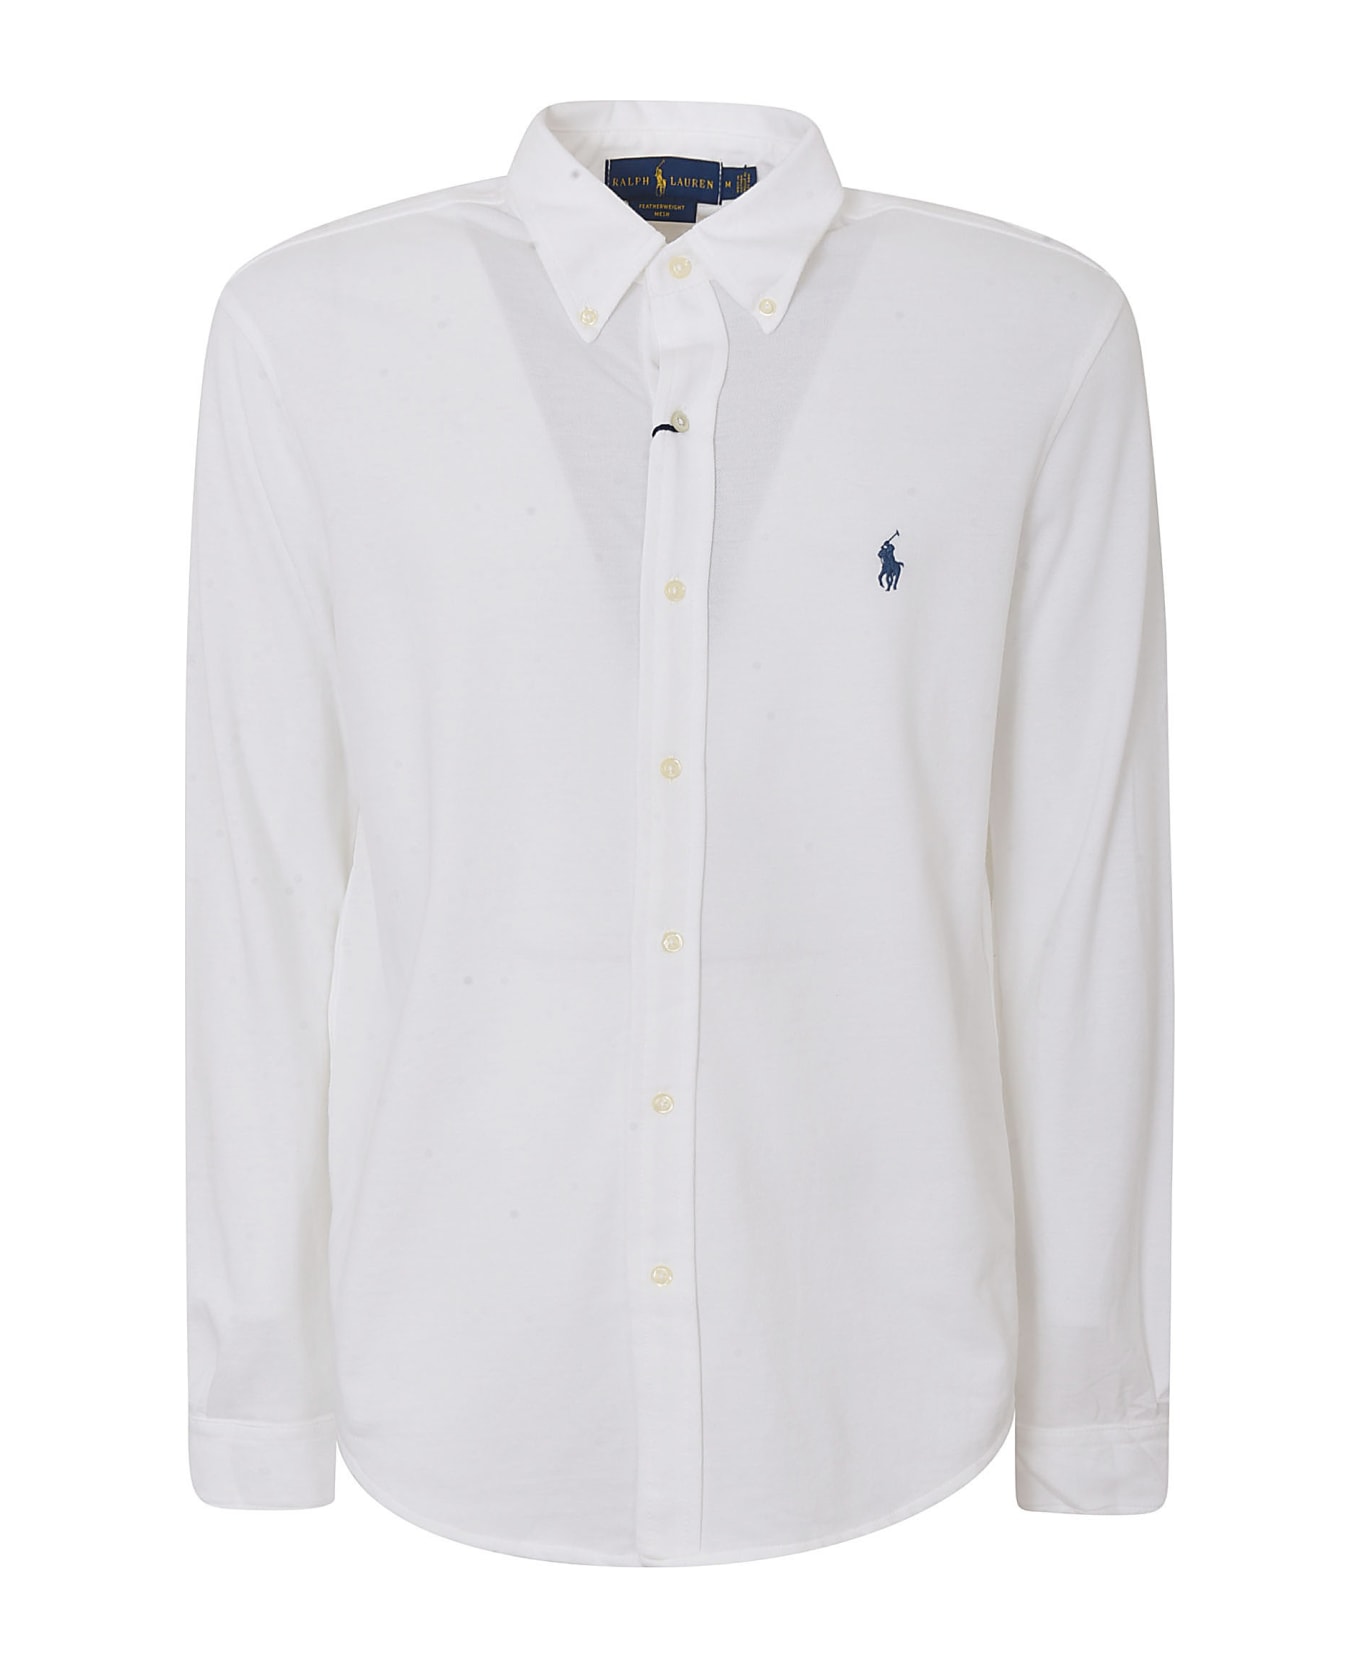 Polo Ralph Lauren Logo Embroidered Shirt - White